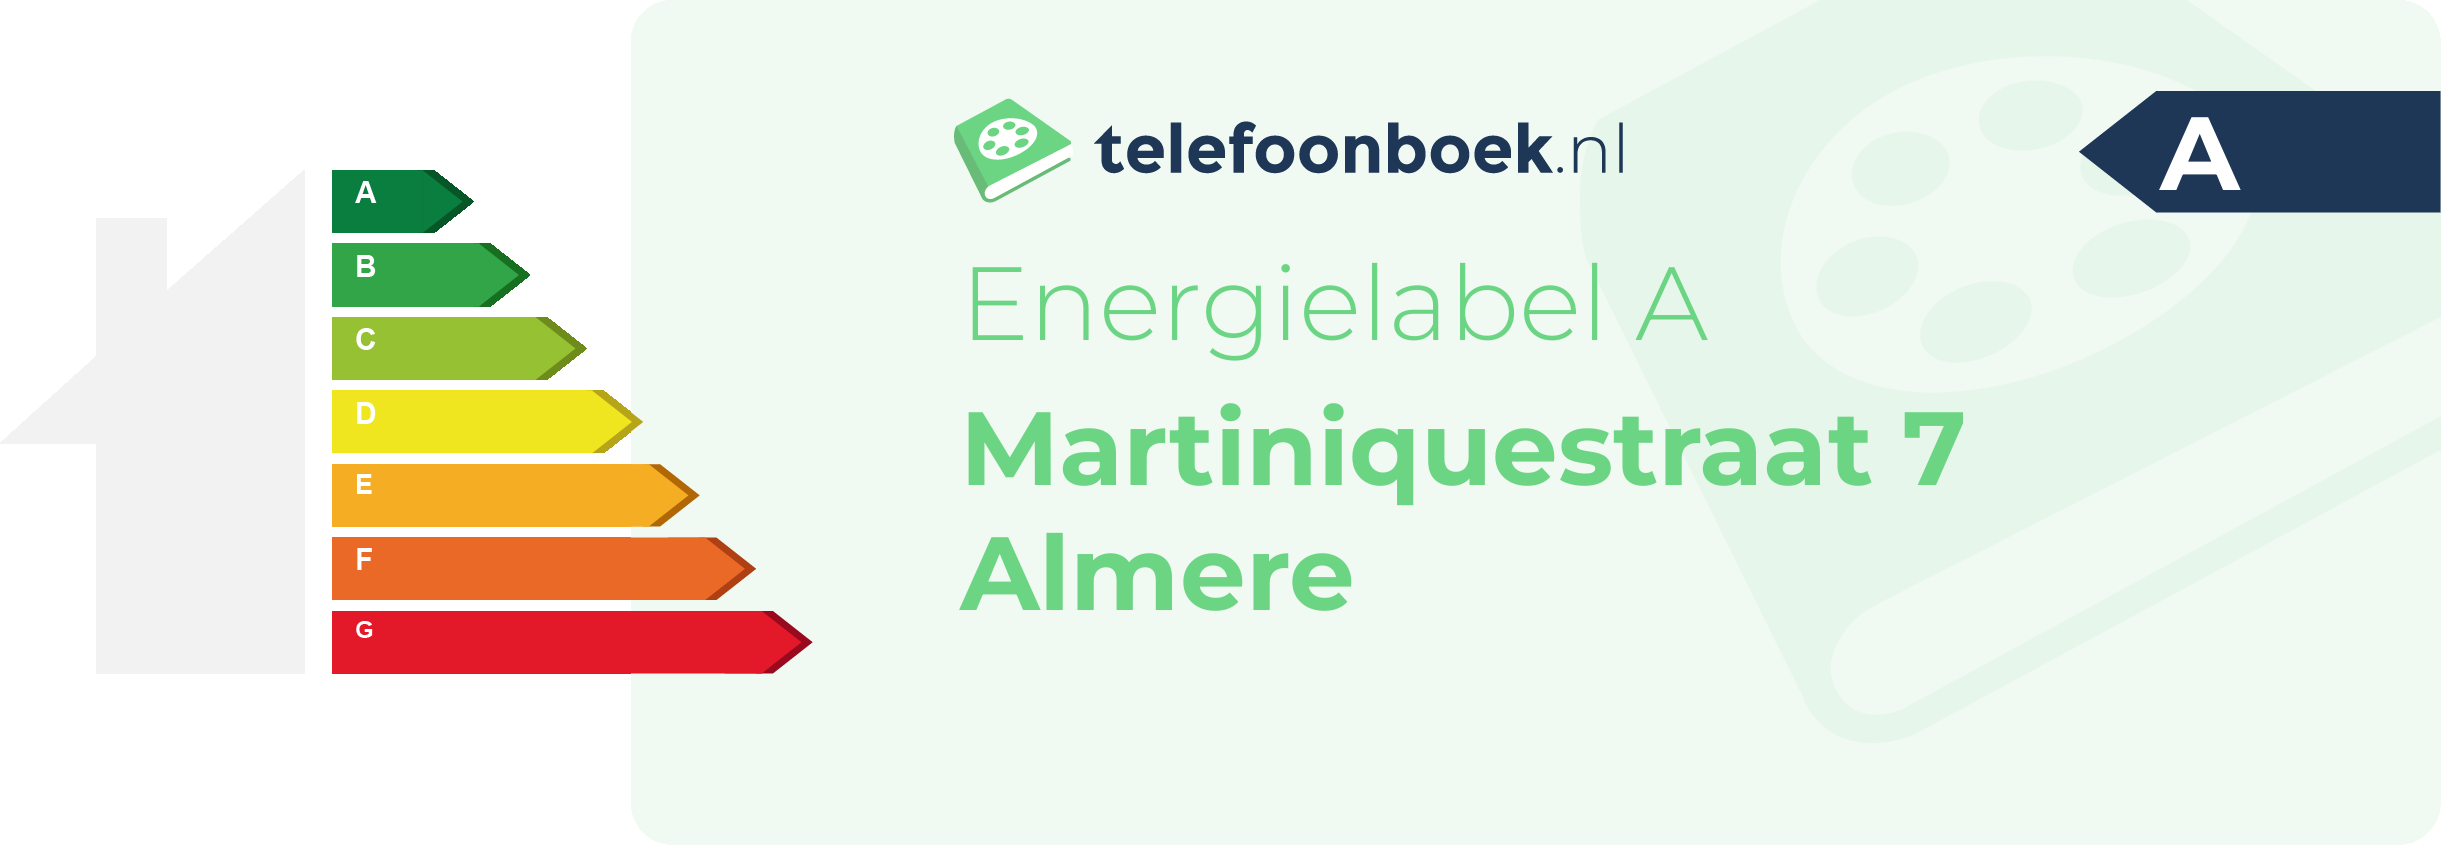 Energielabel Martiniquestraat 7 Almere